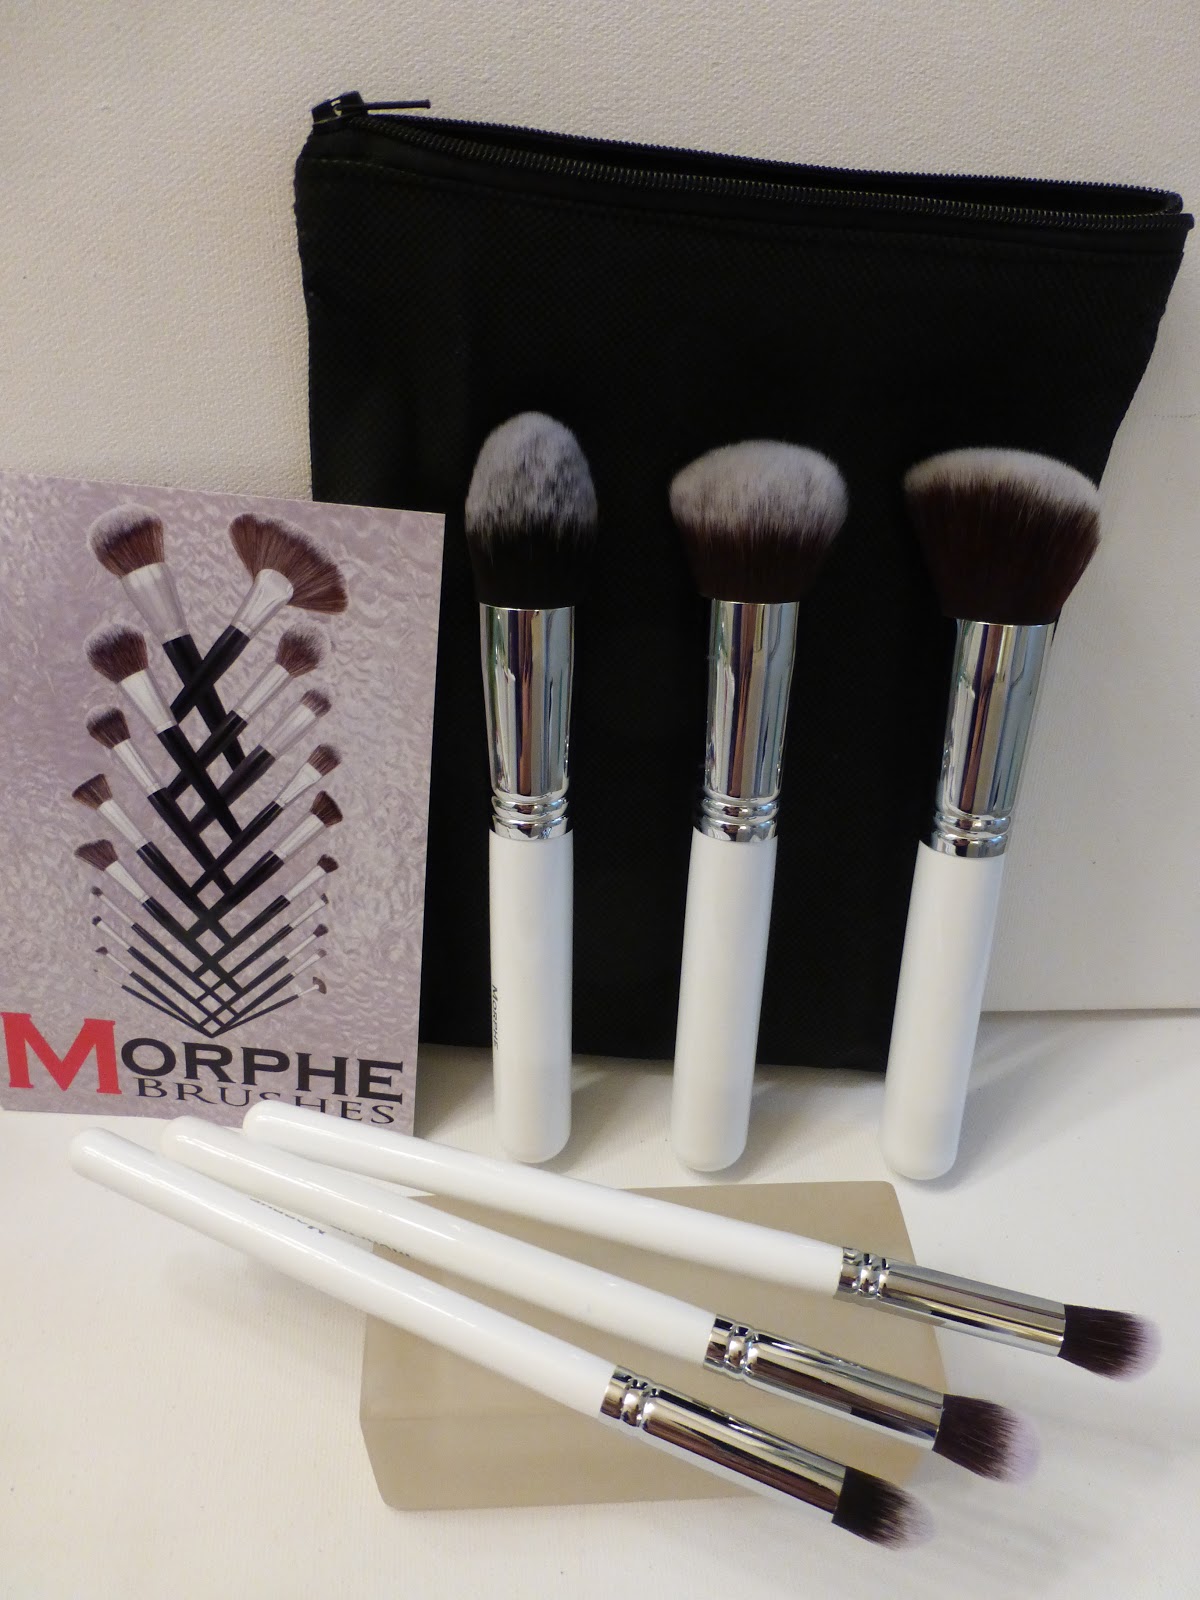 Morphe Makeup Brush Set Canada - Mugeek Vidalondon